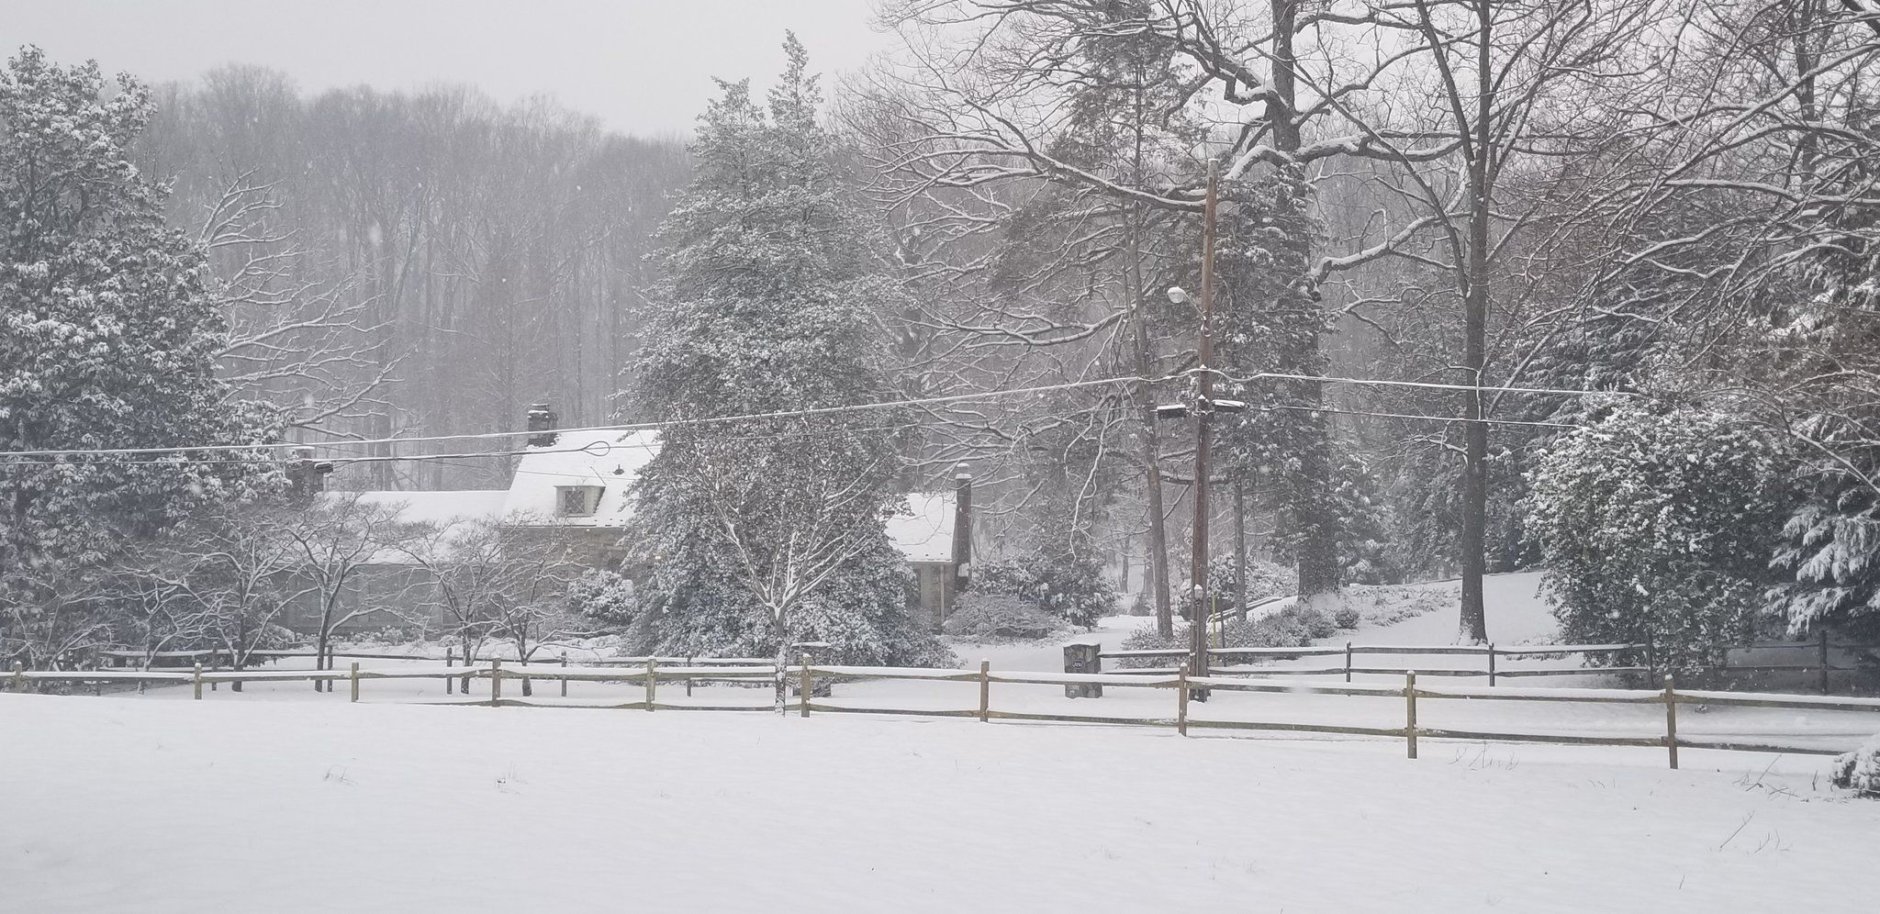 It's a winter wonderland in Falls Church, Virginia. (WTOP/Hillary Howard)